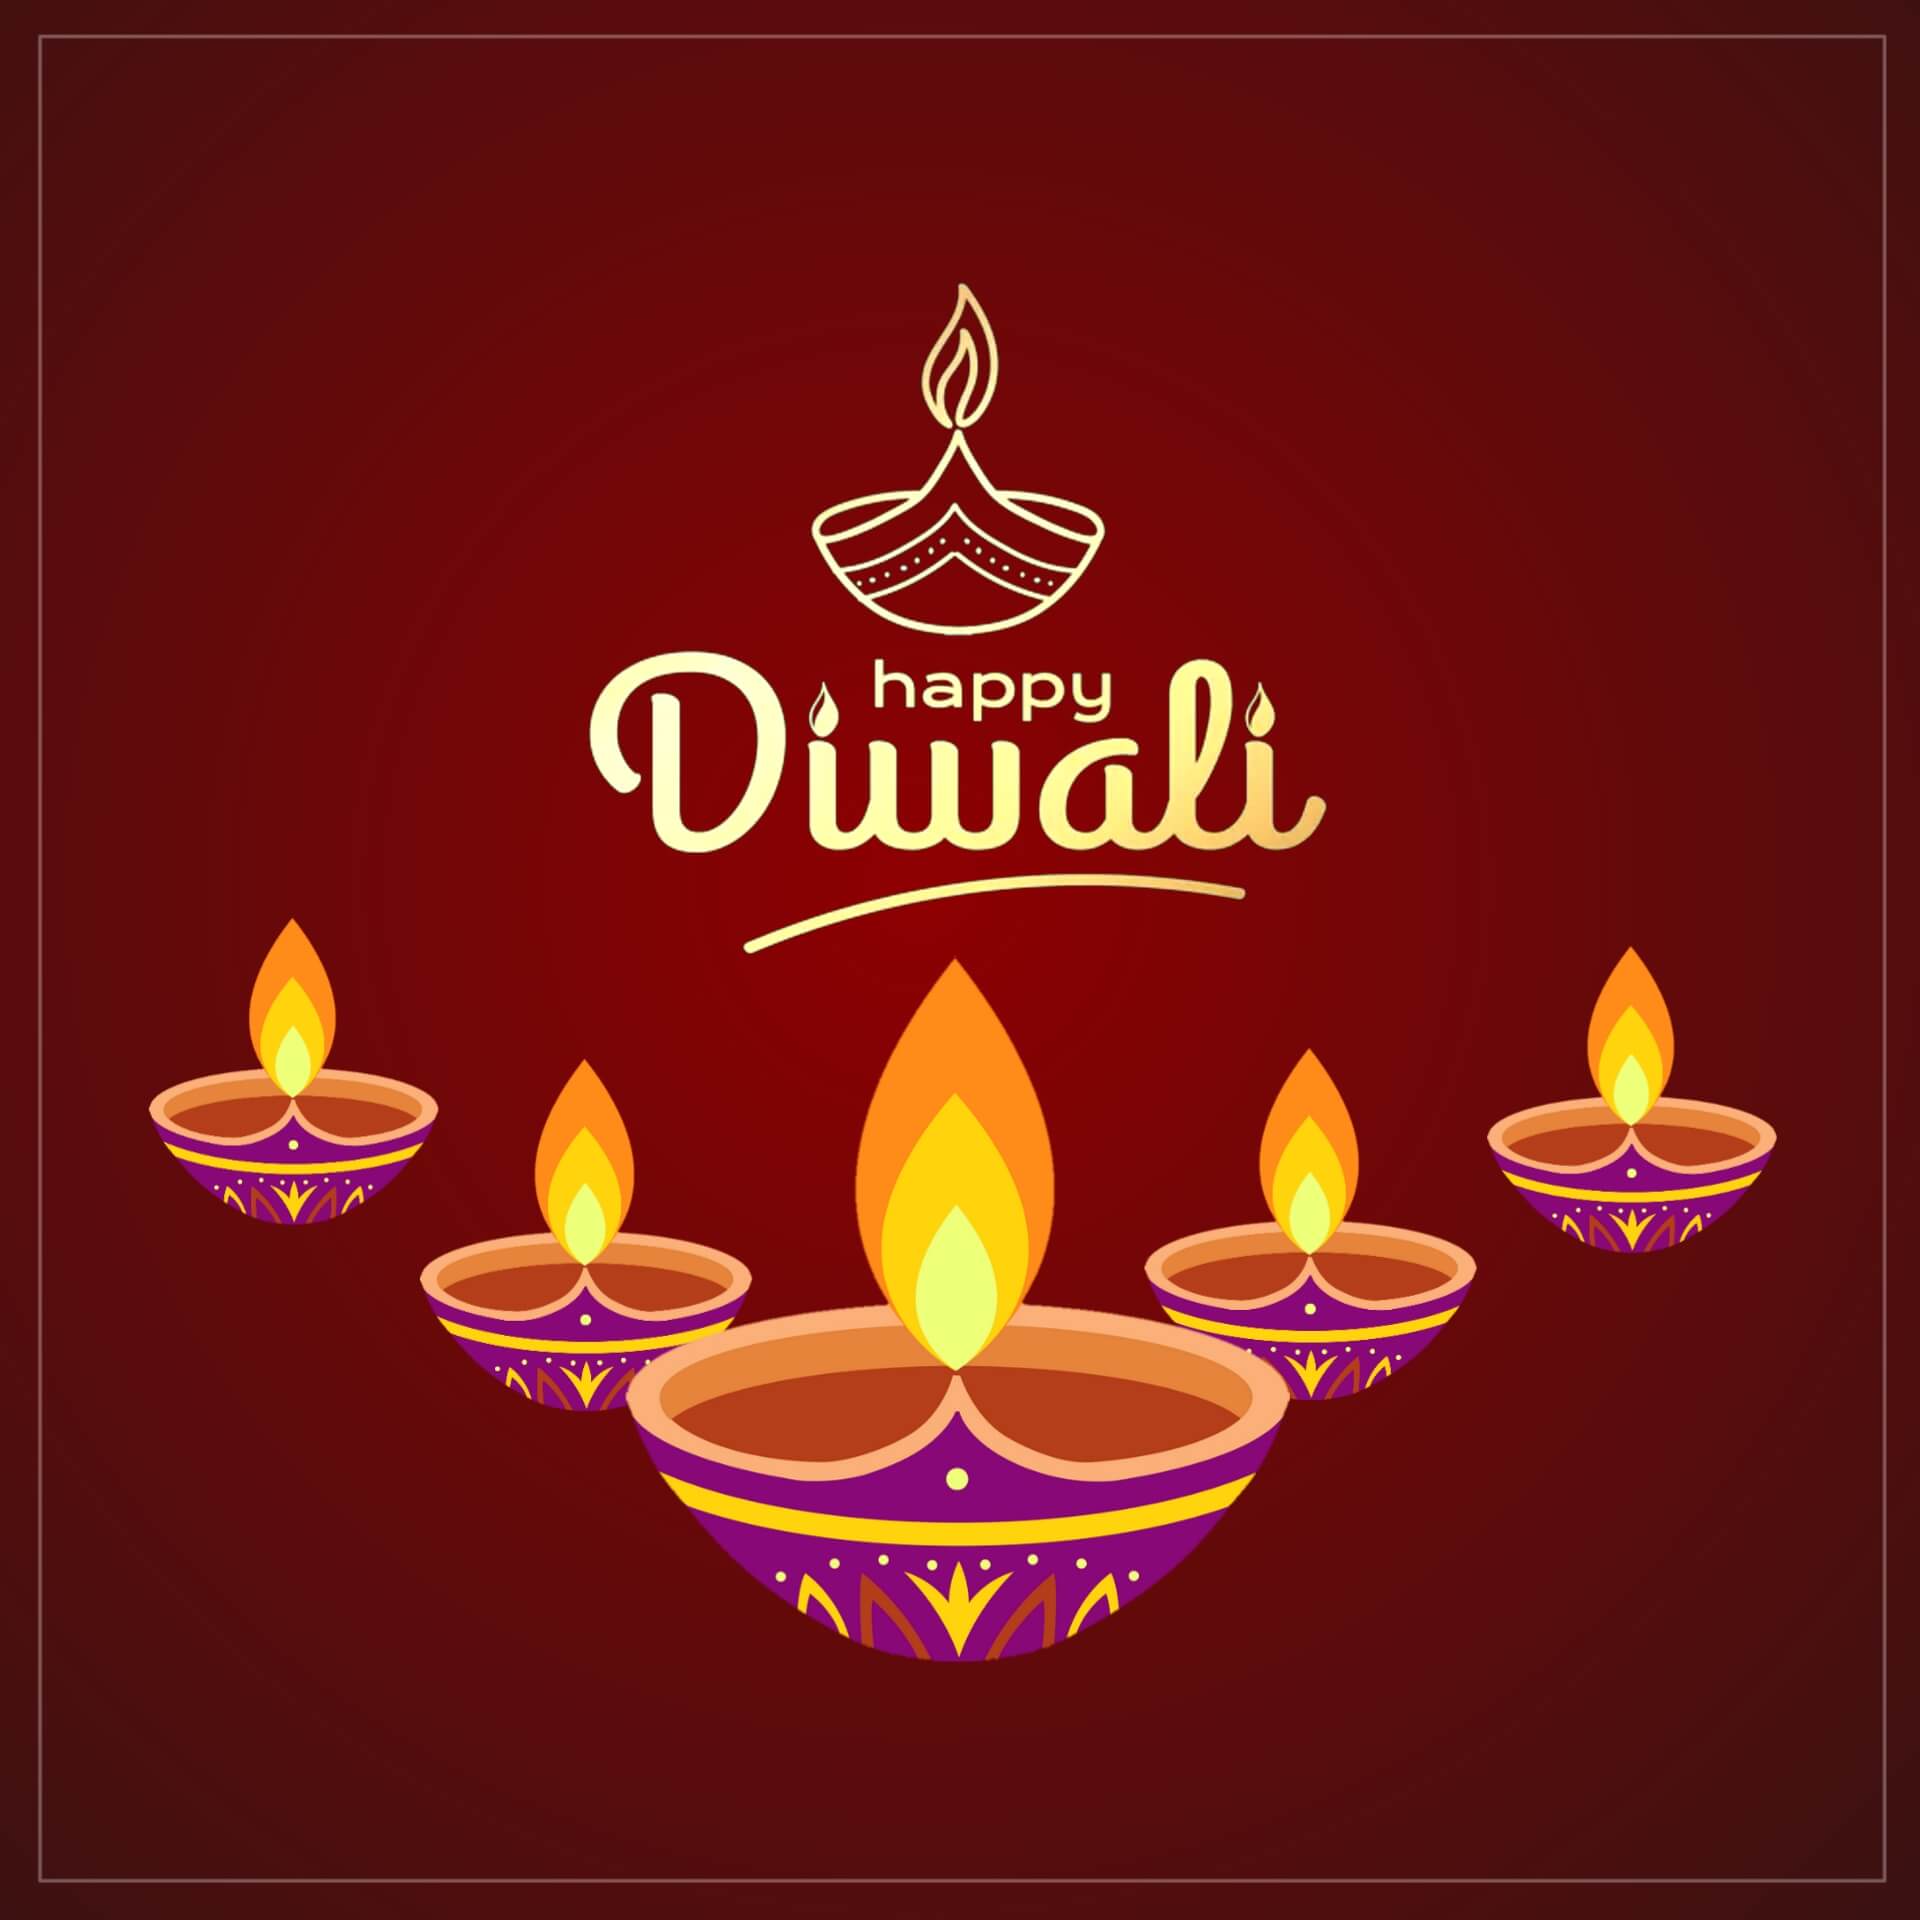 Animated Happy Diwali Image